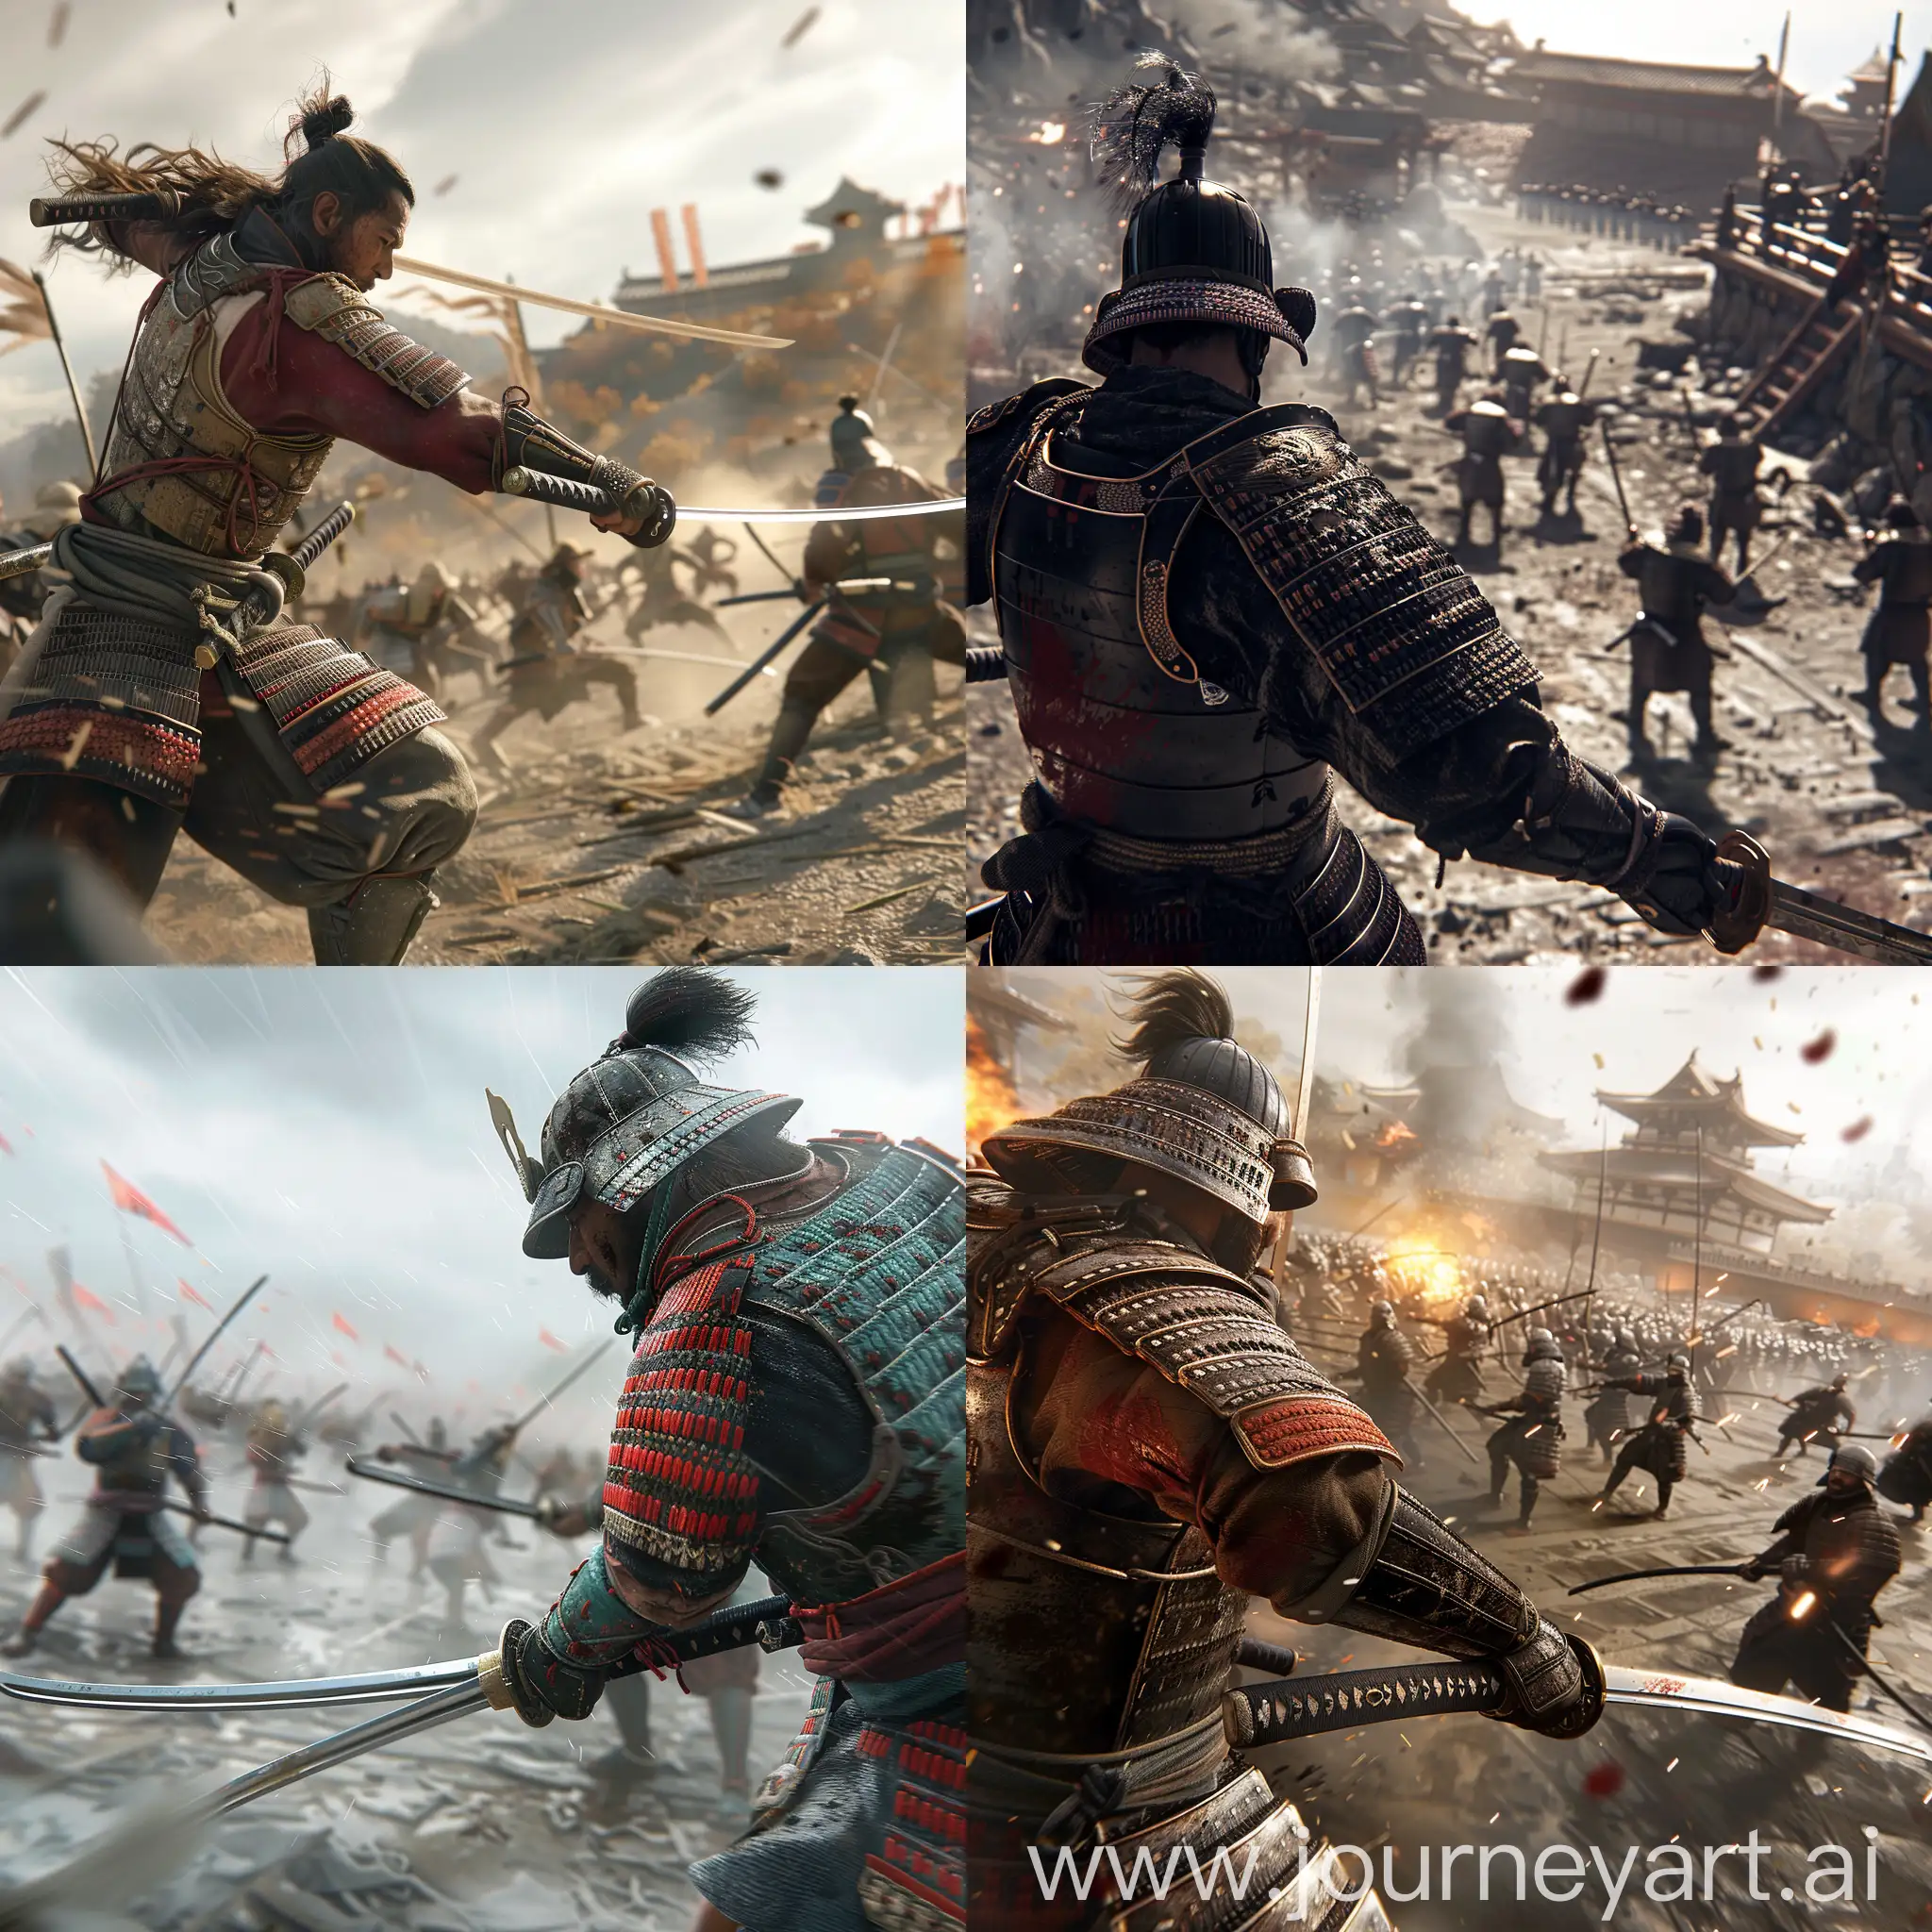 Samurai-Warrior-Wielding-Sword-on-Battlefield